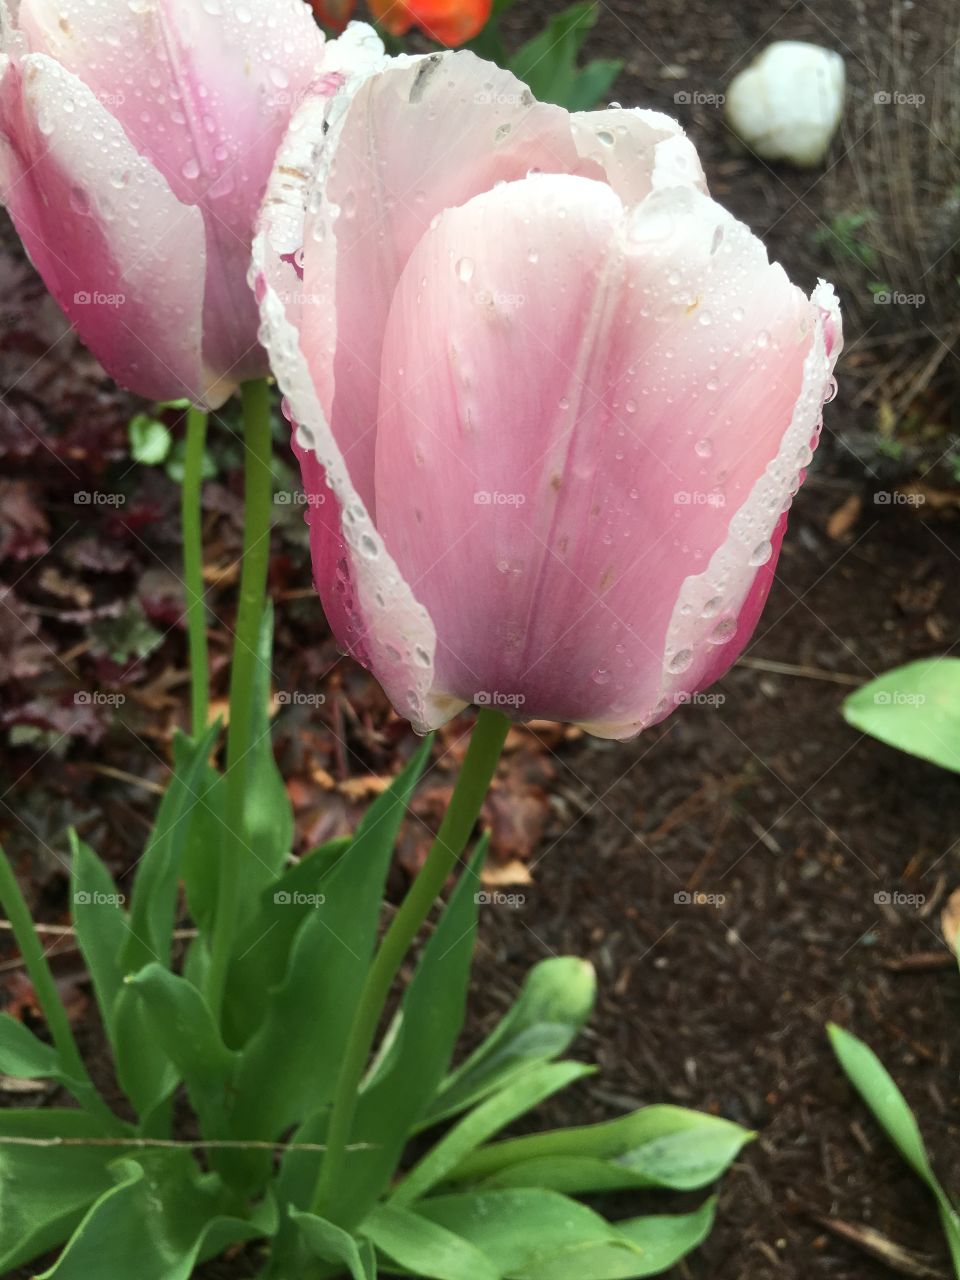 Dewdrops on Tulip